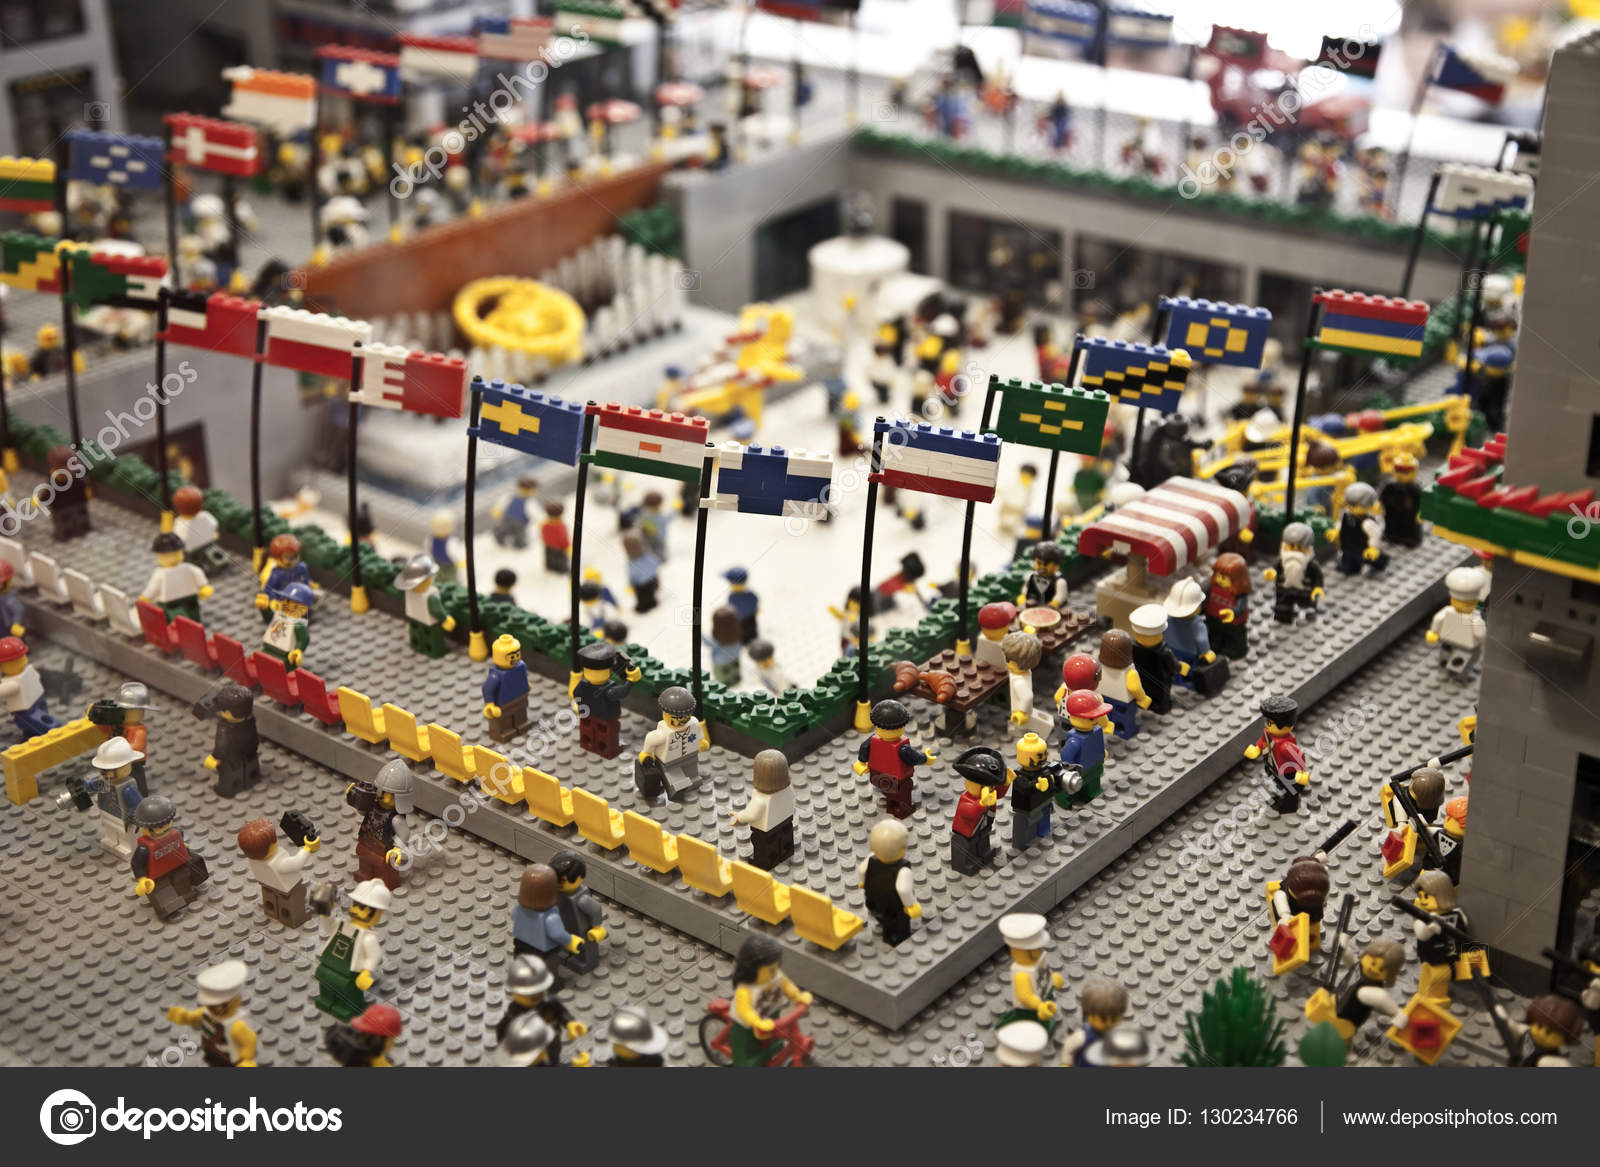 Lego construction toys in store in Manhattan Editorial Photo © susanavalera.gmail.com #130234766